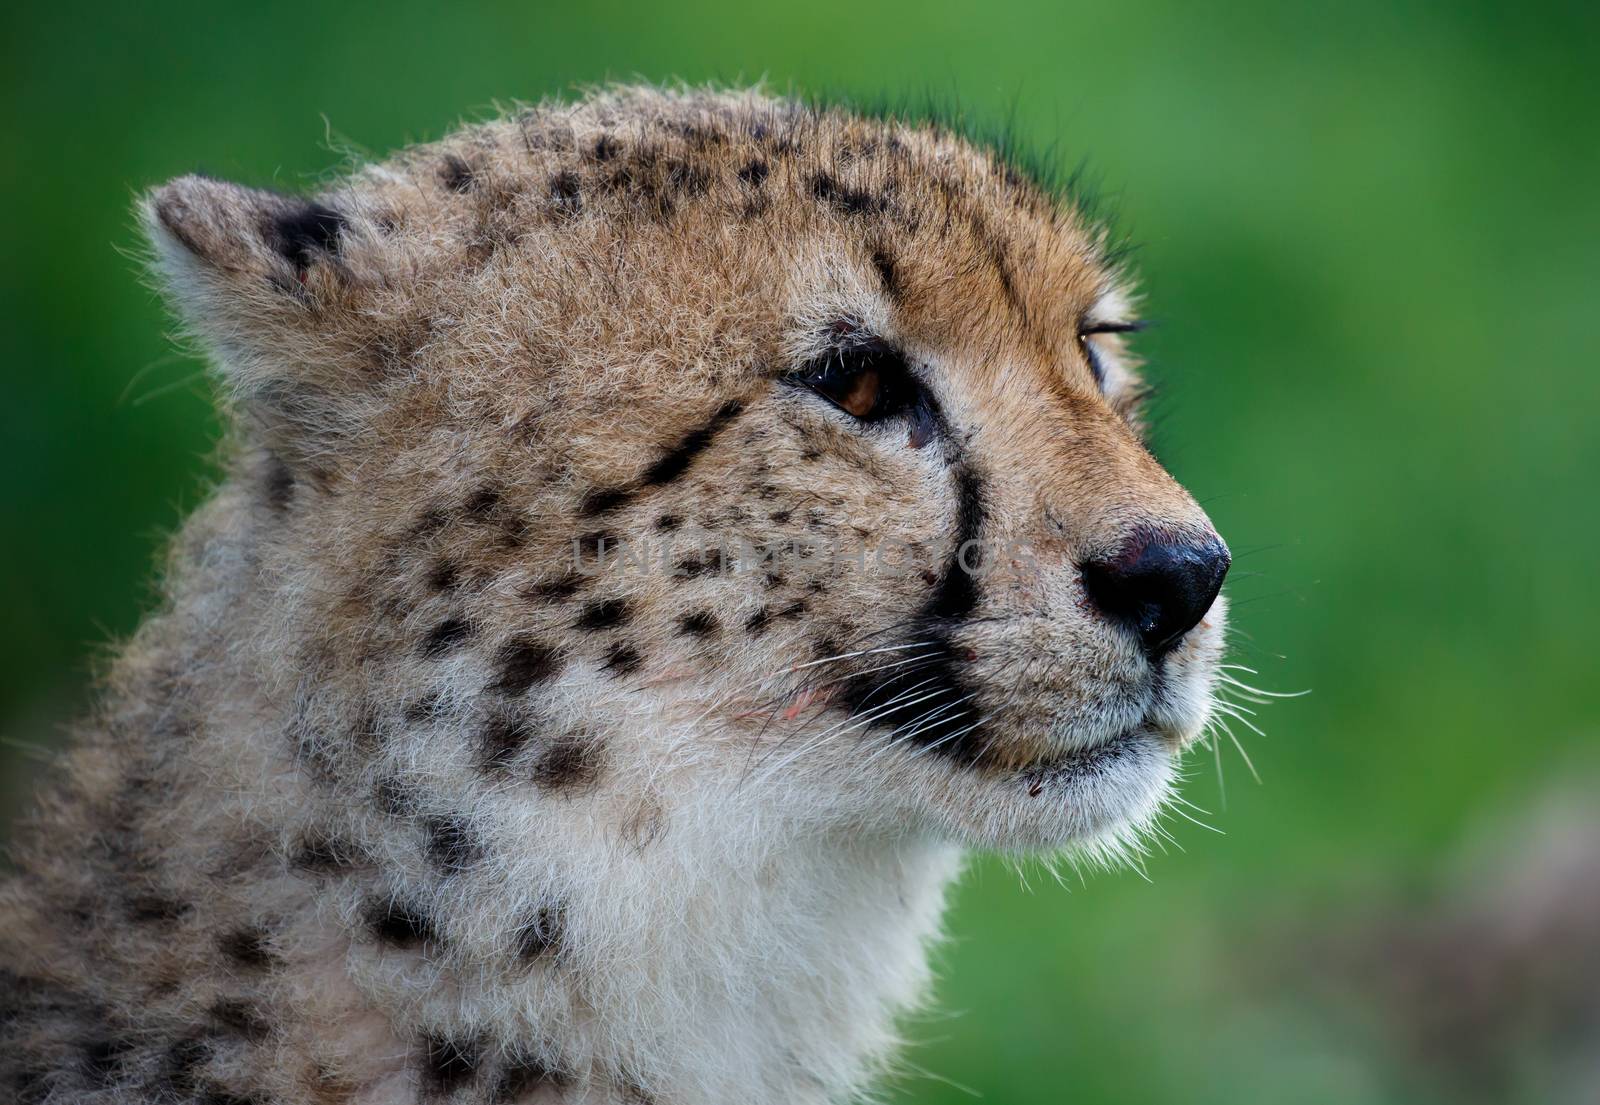 Cheetah Portrait on Green Backround by fouroaks